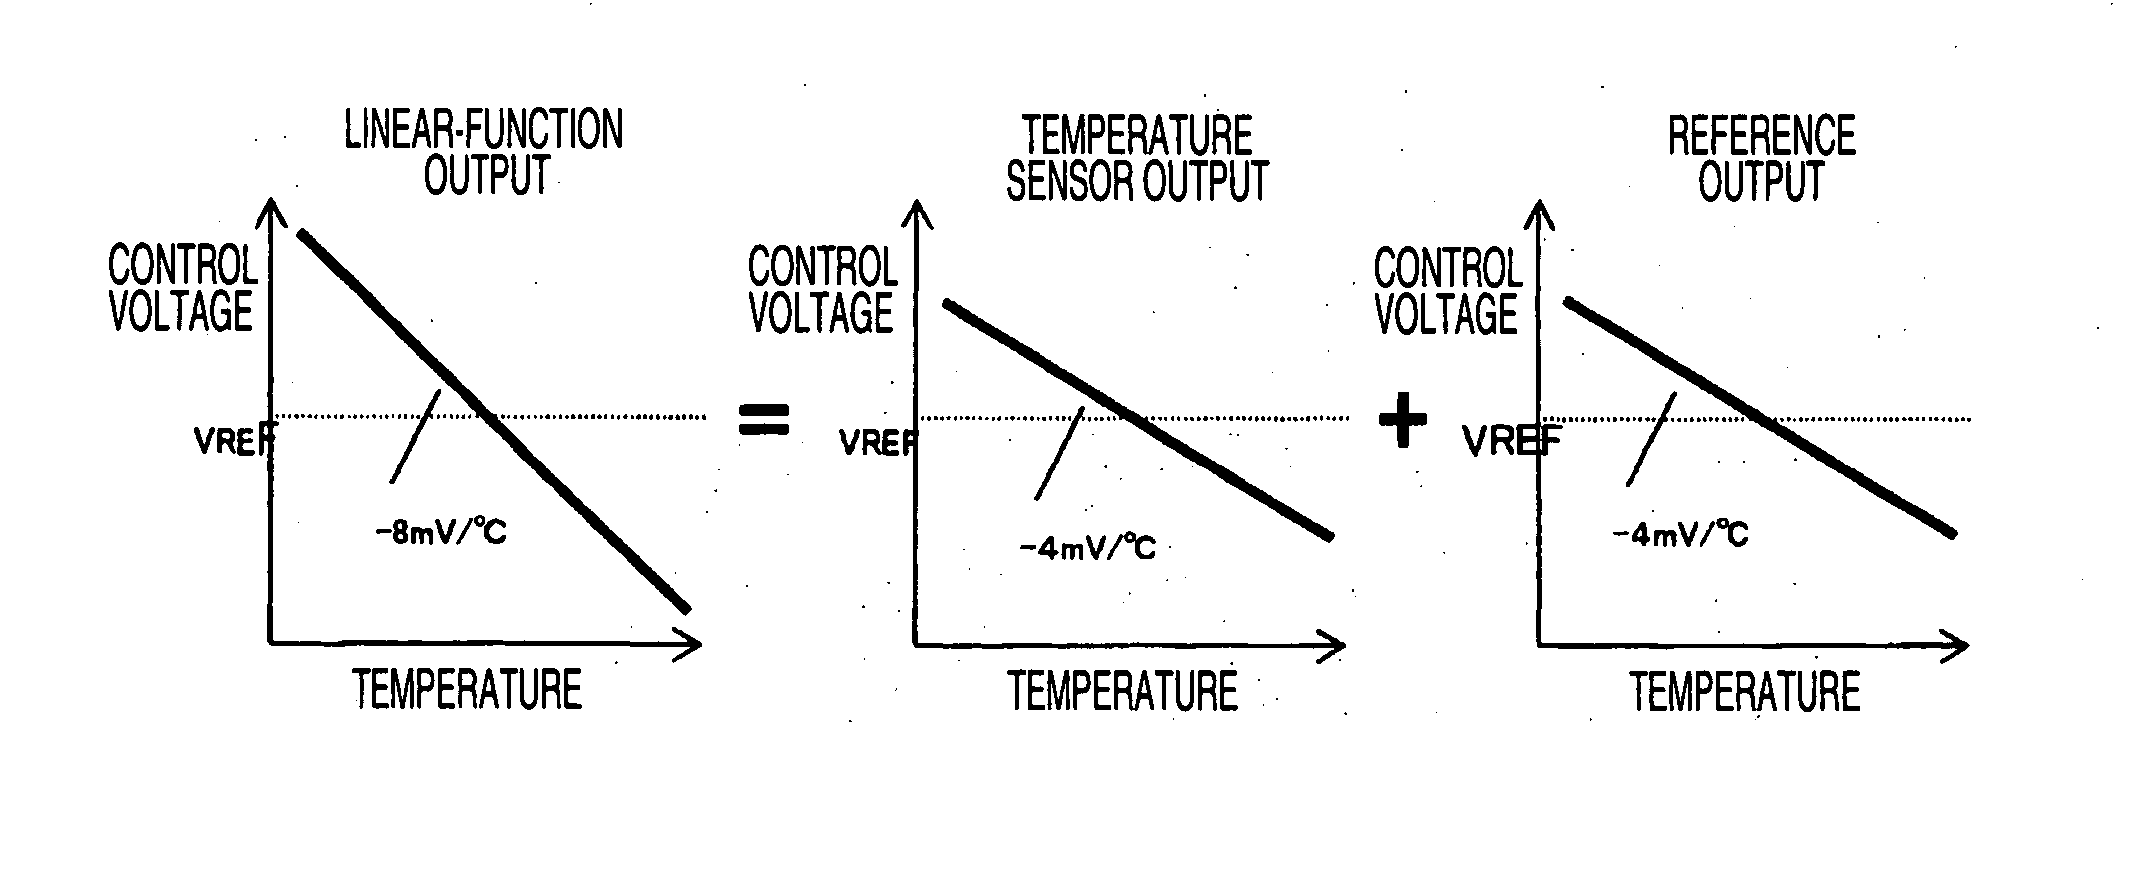 Temperature-compensated crystal oscillator